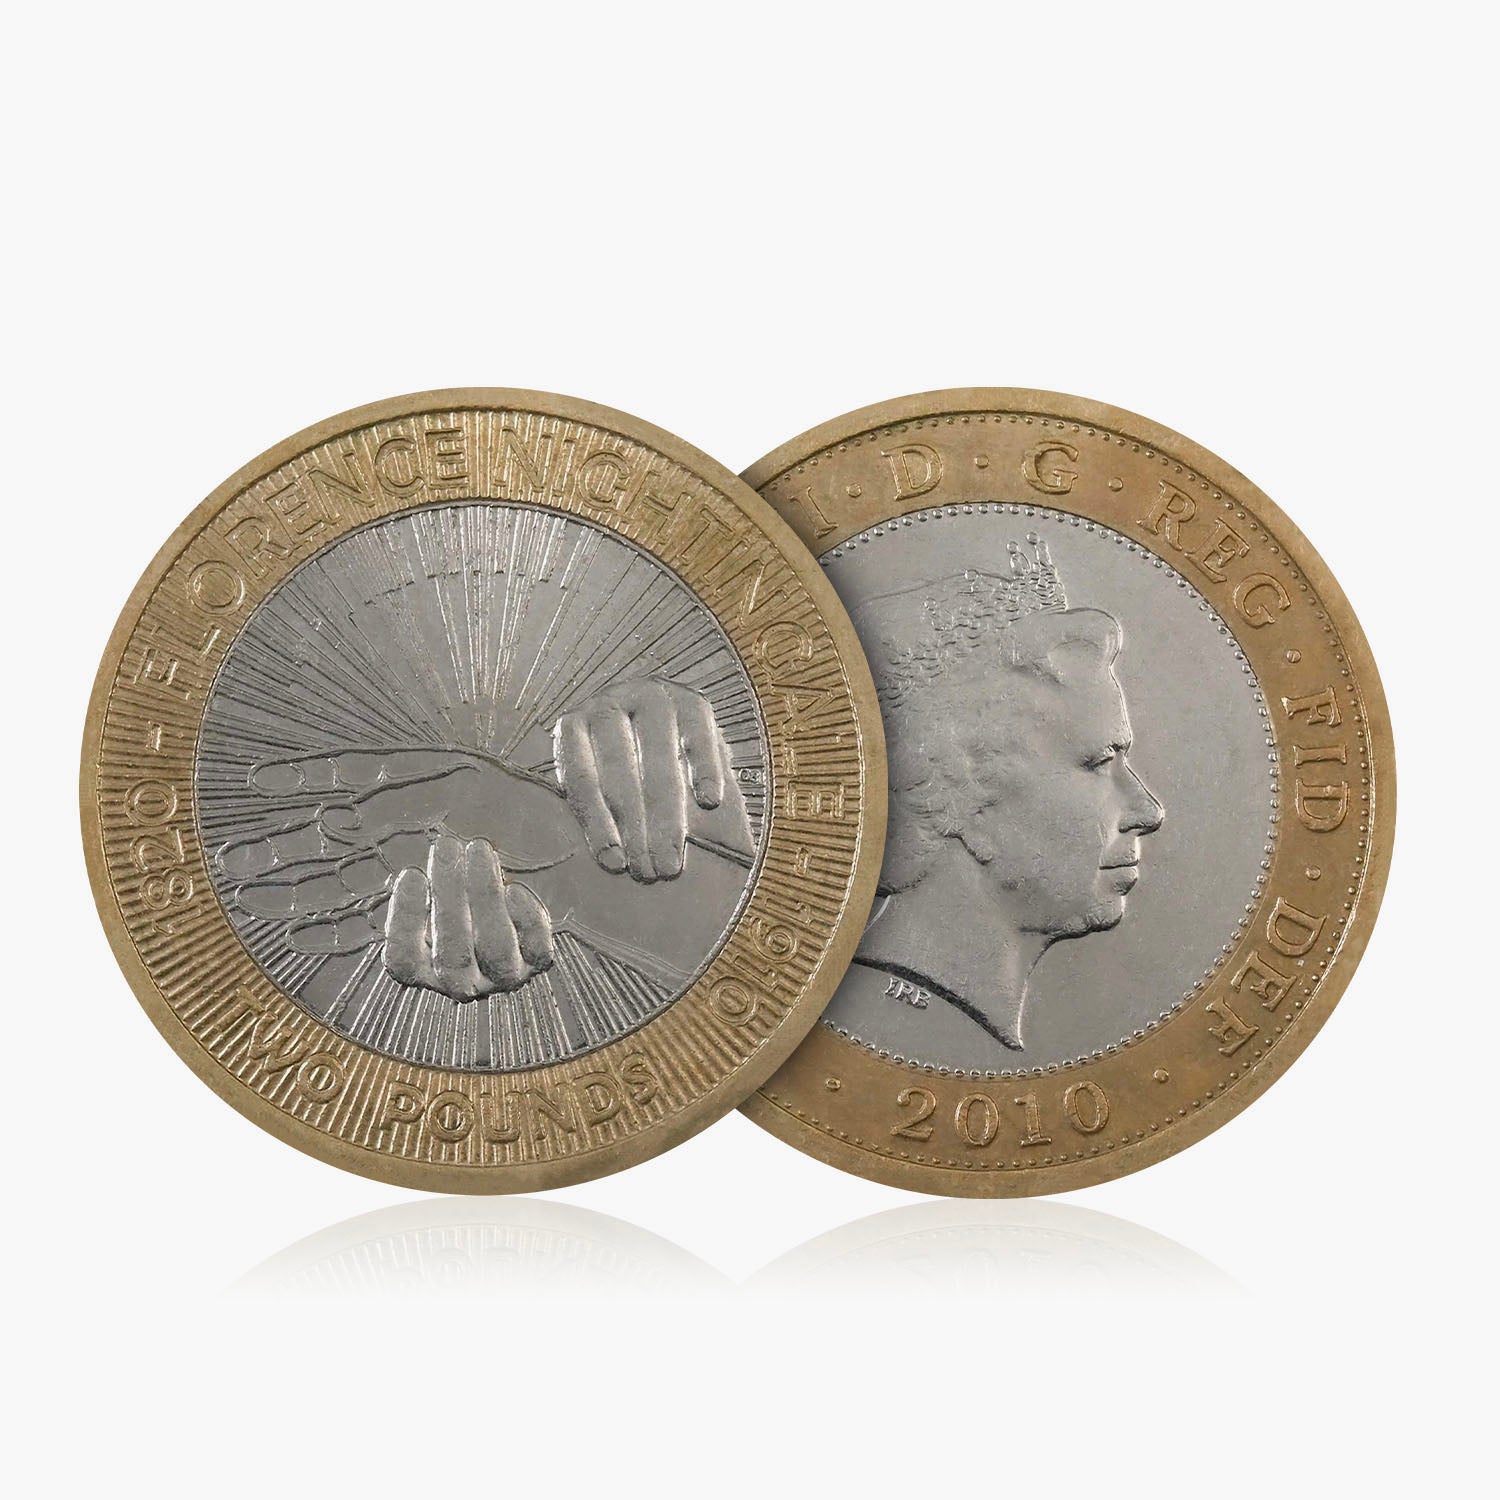 2010 Circulated Florence Nightingale UK £2 Coin